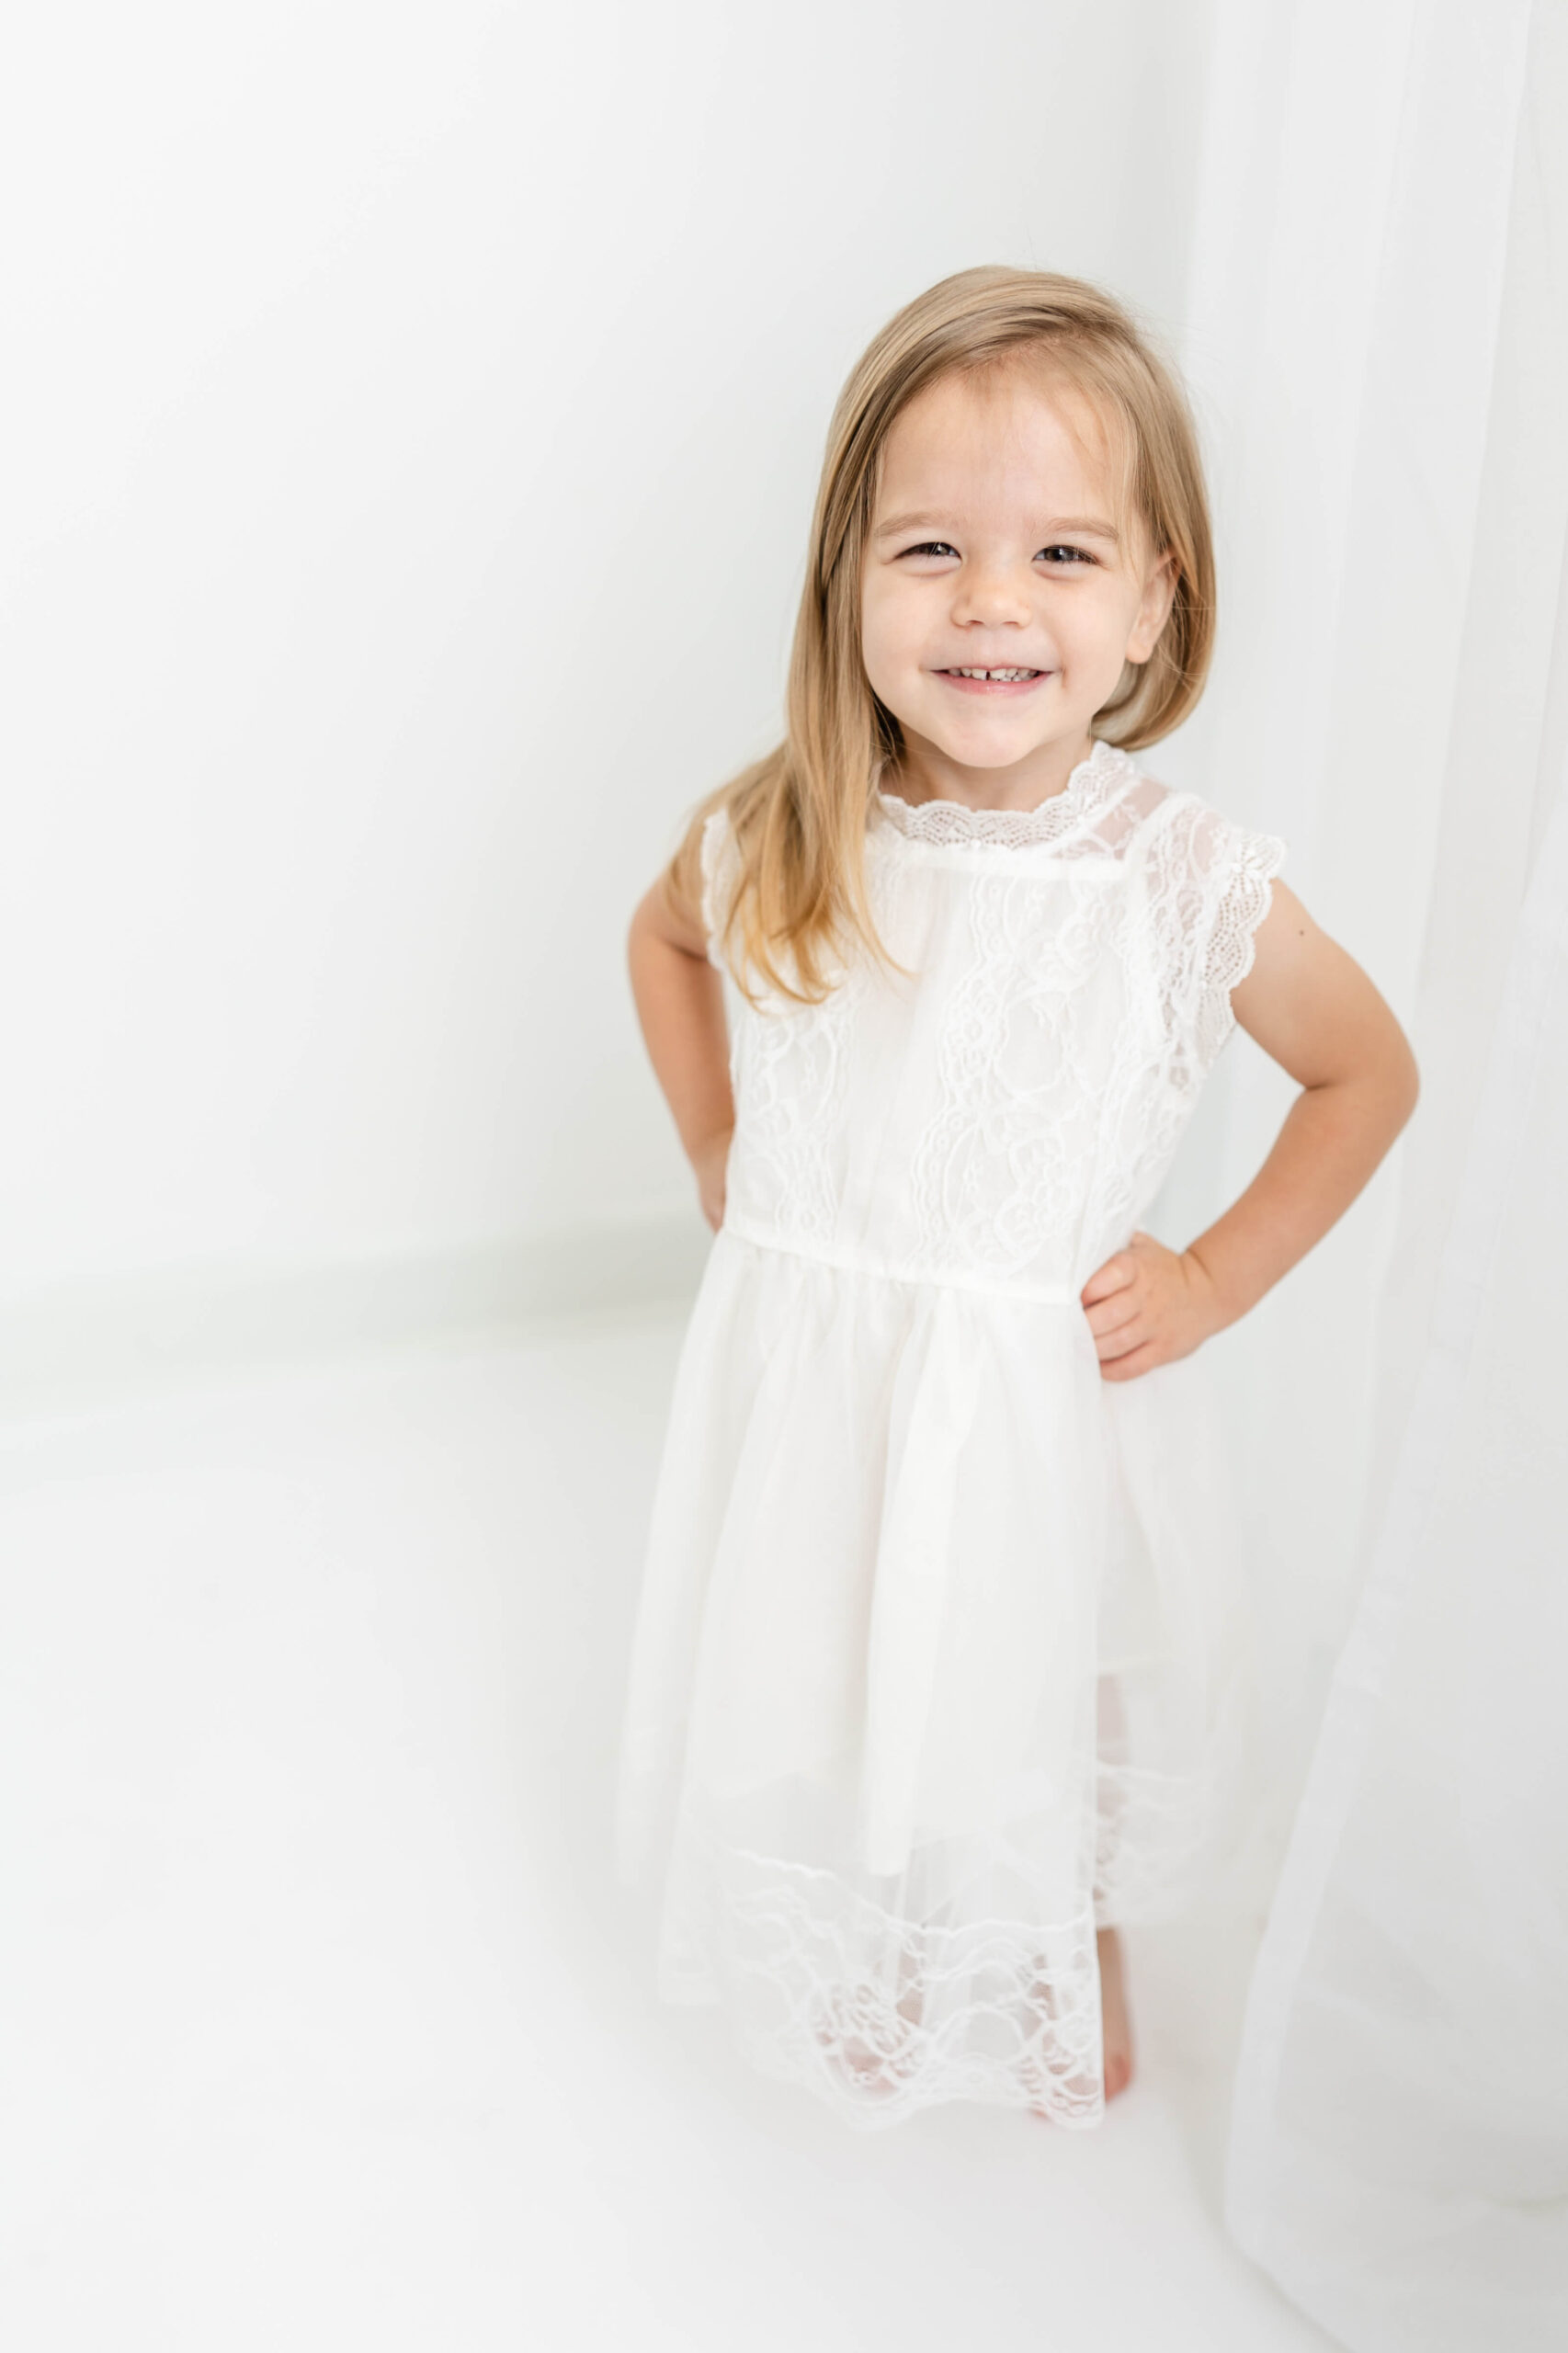 Captured smiling girl in white dress during studio session.